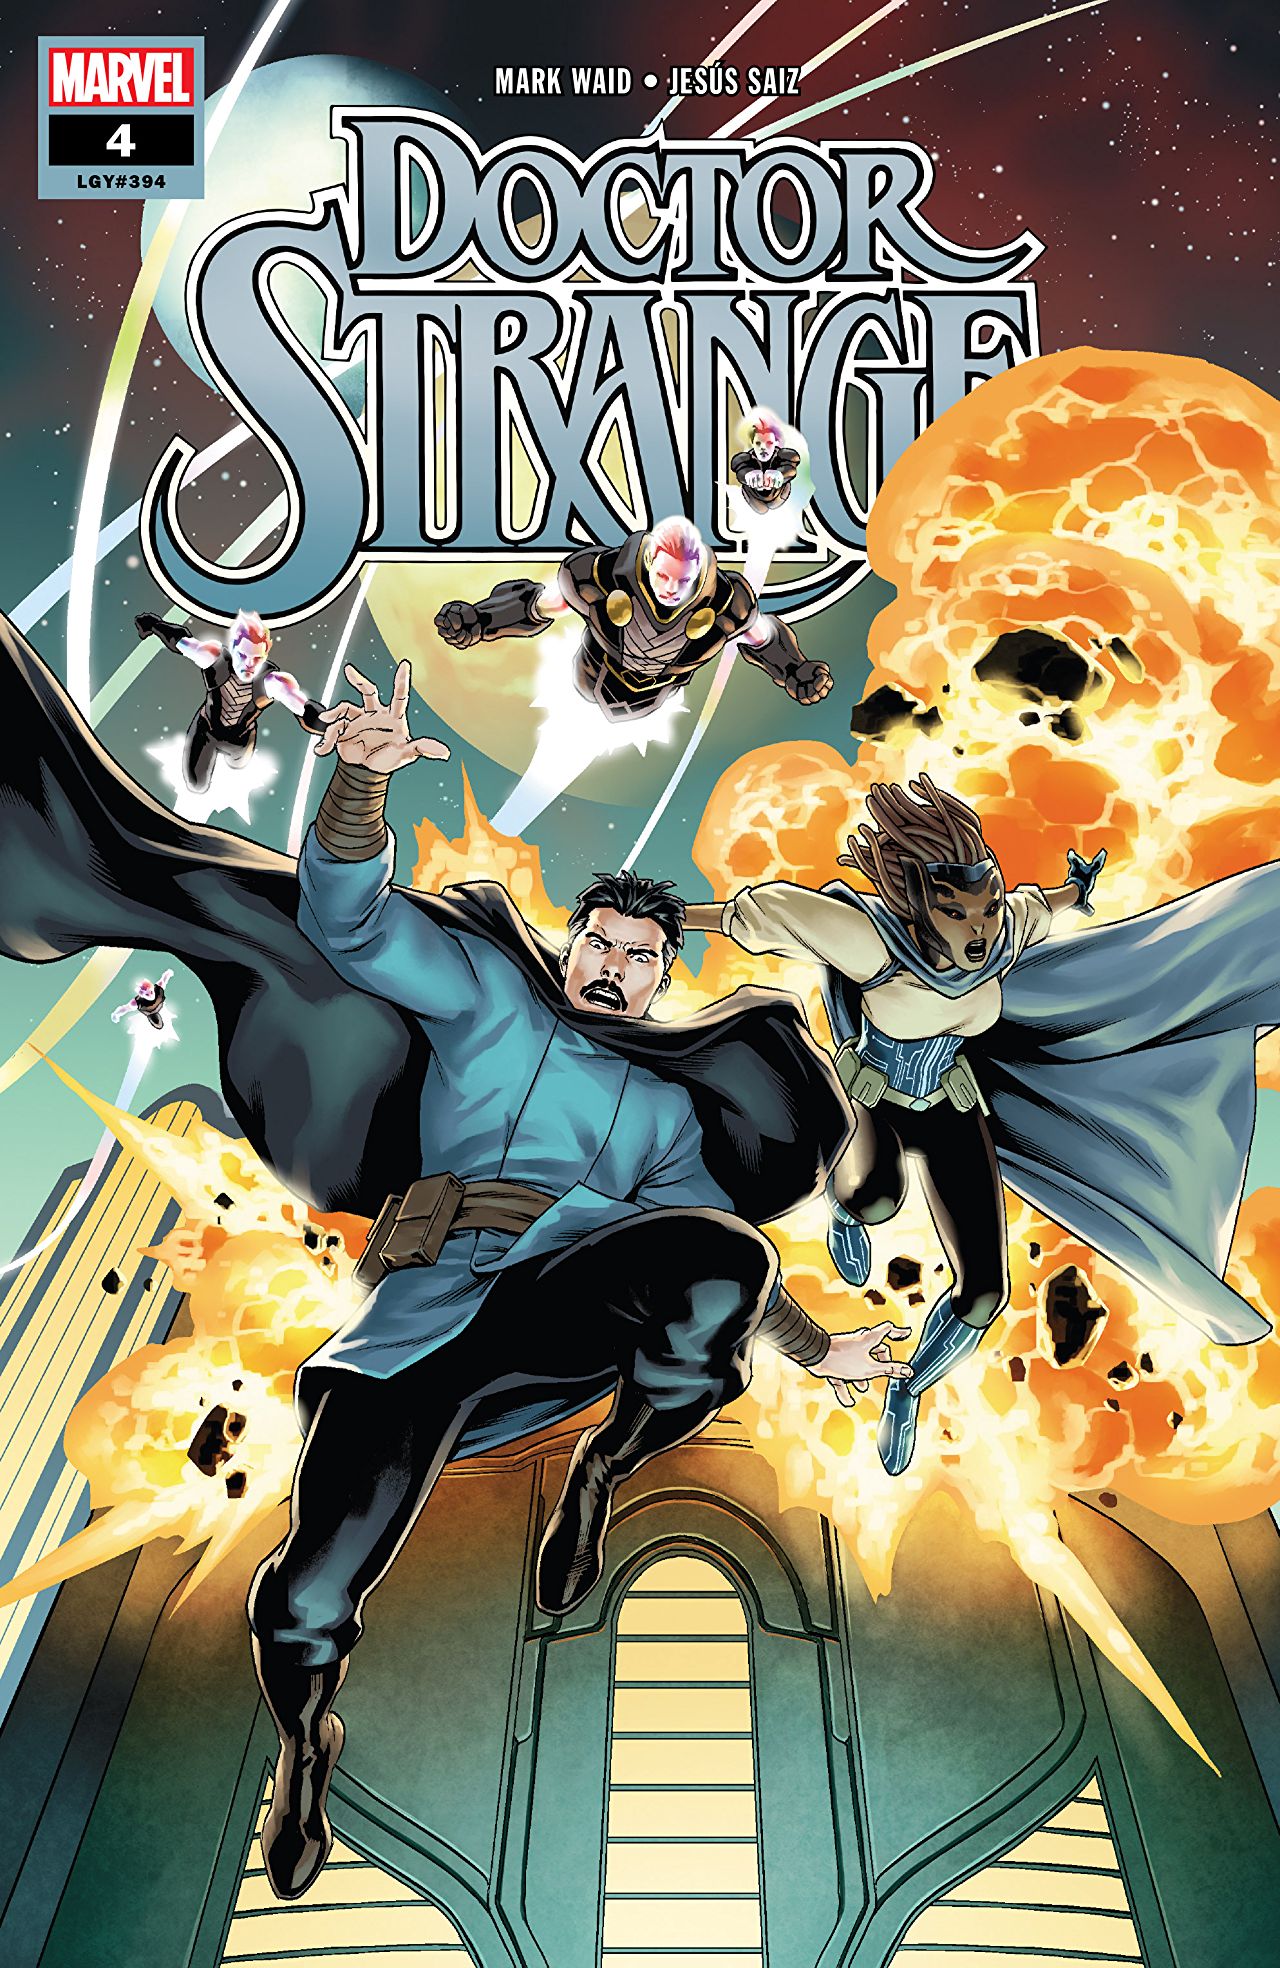 Doctor Strange #4 Review